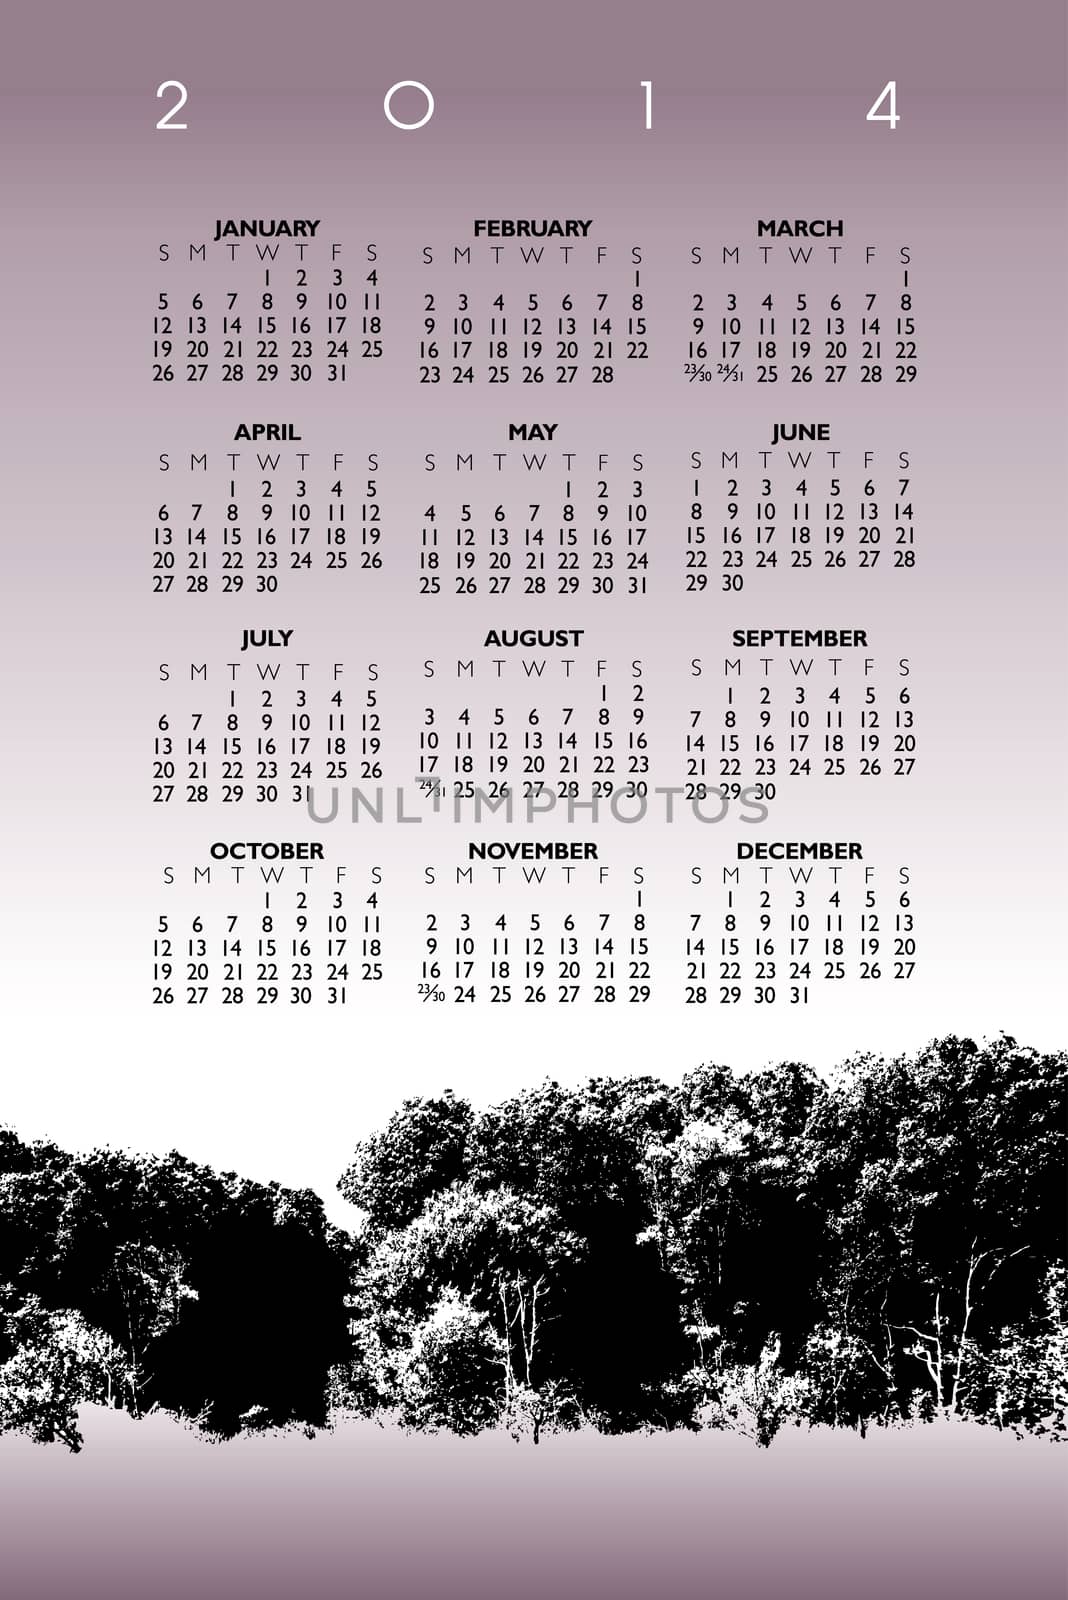 2014 Creative Apple Calendar by mike301